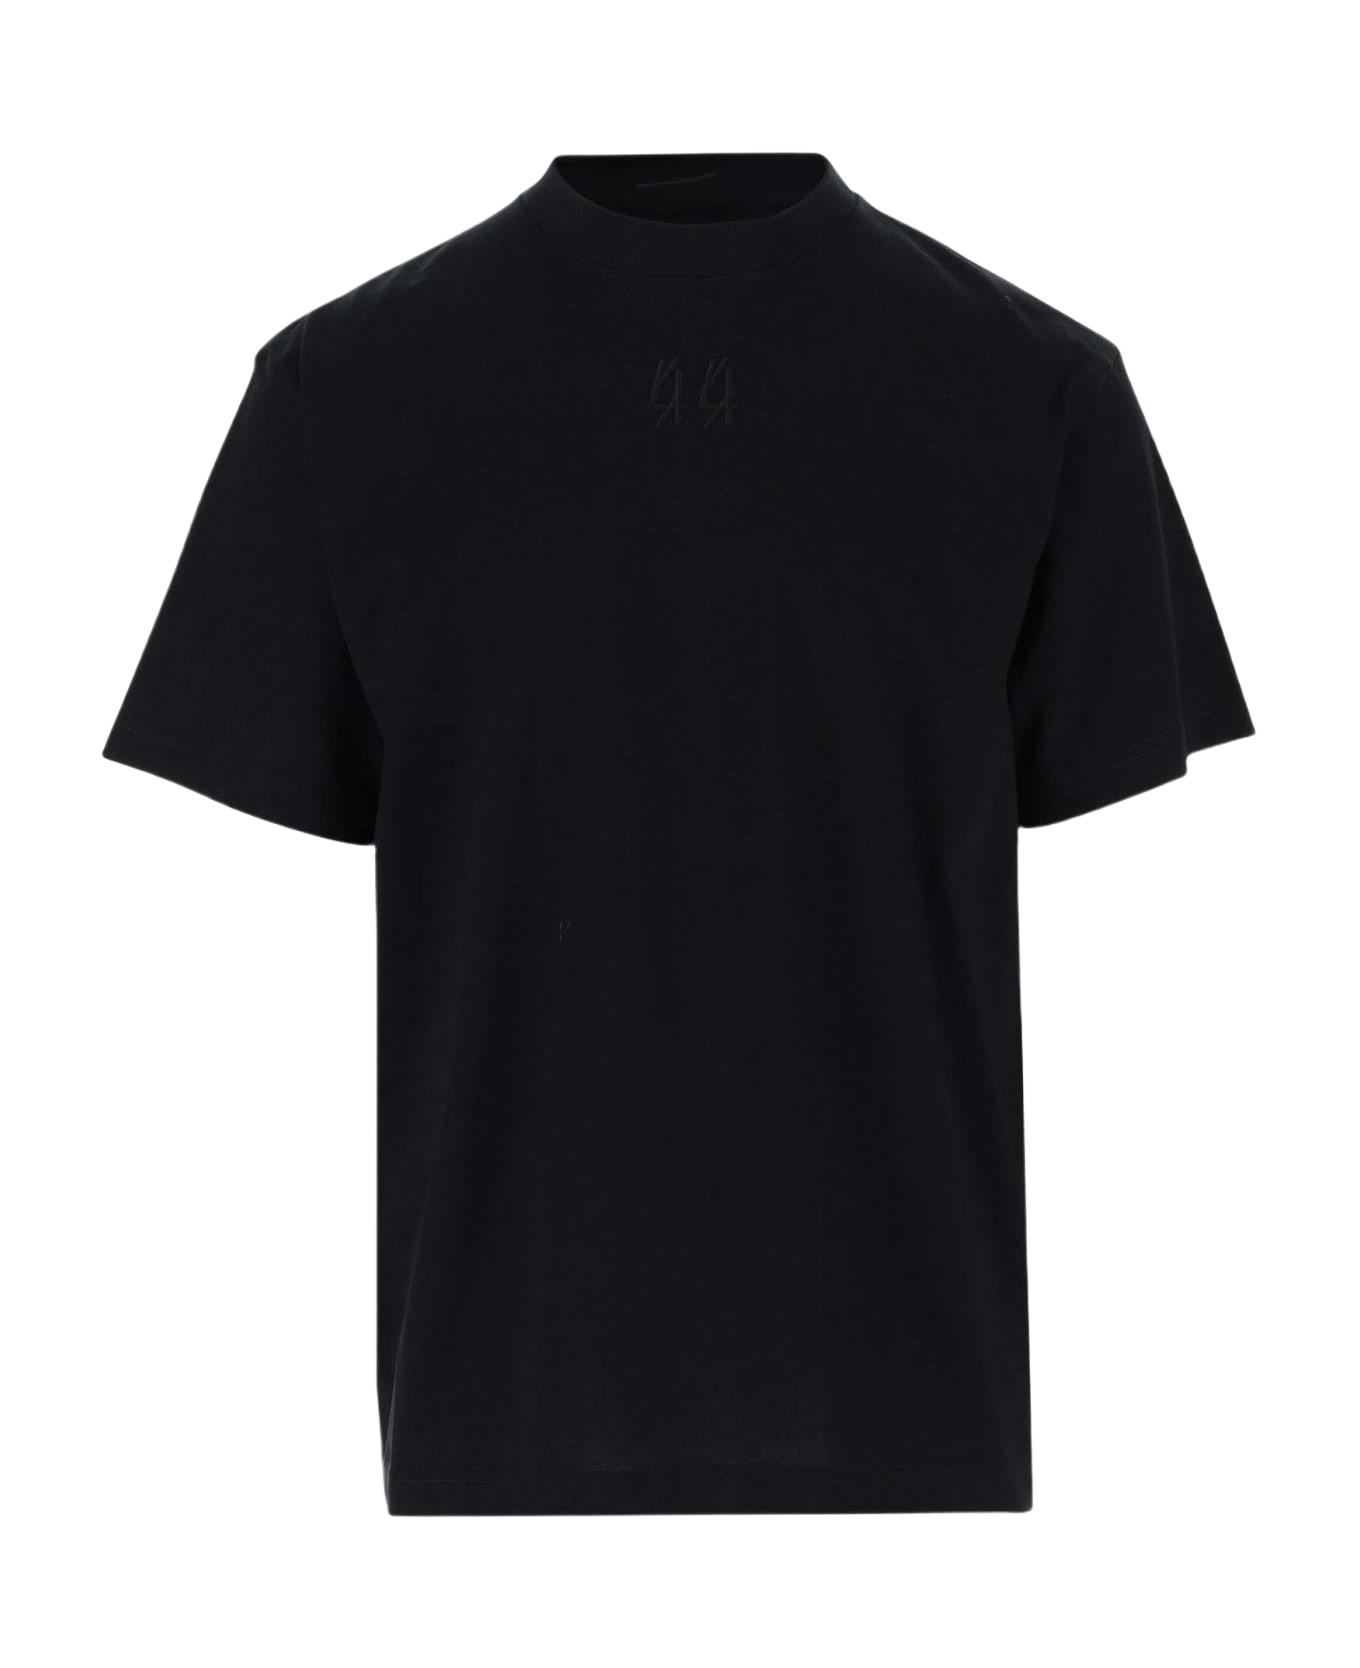 44 Label Group Cotton T-shirt With Logo T-Shirt - BLACK